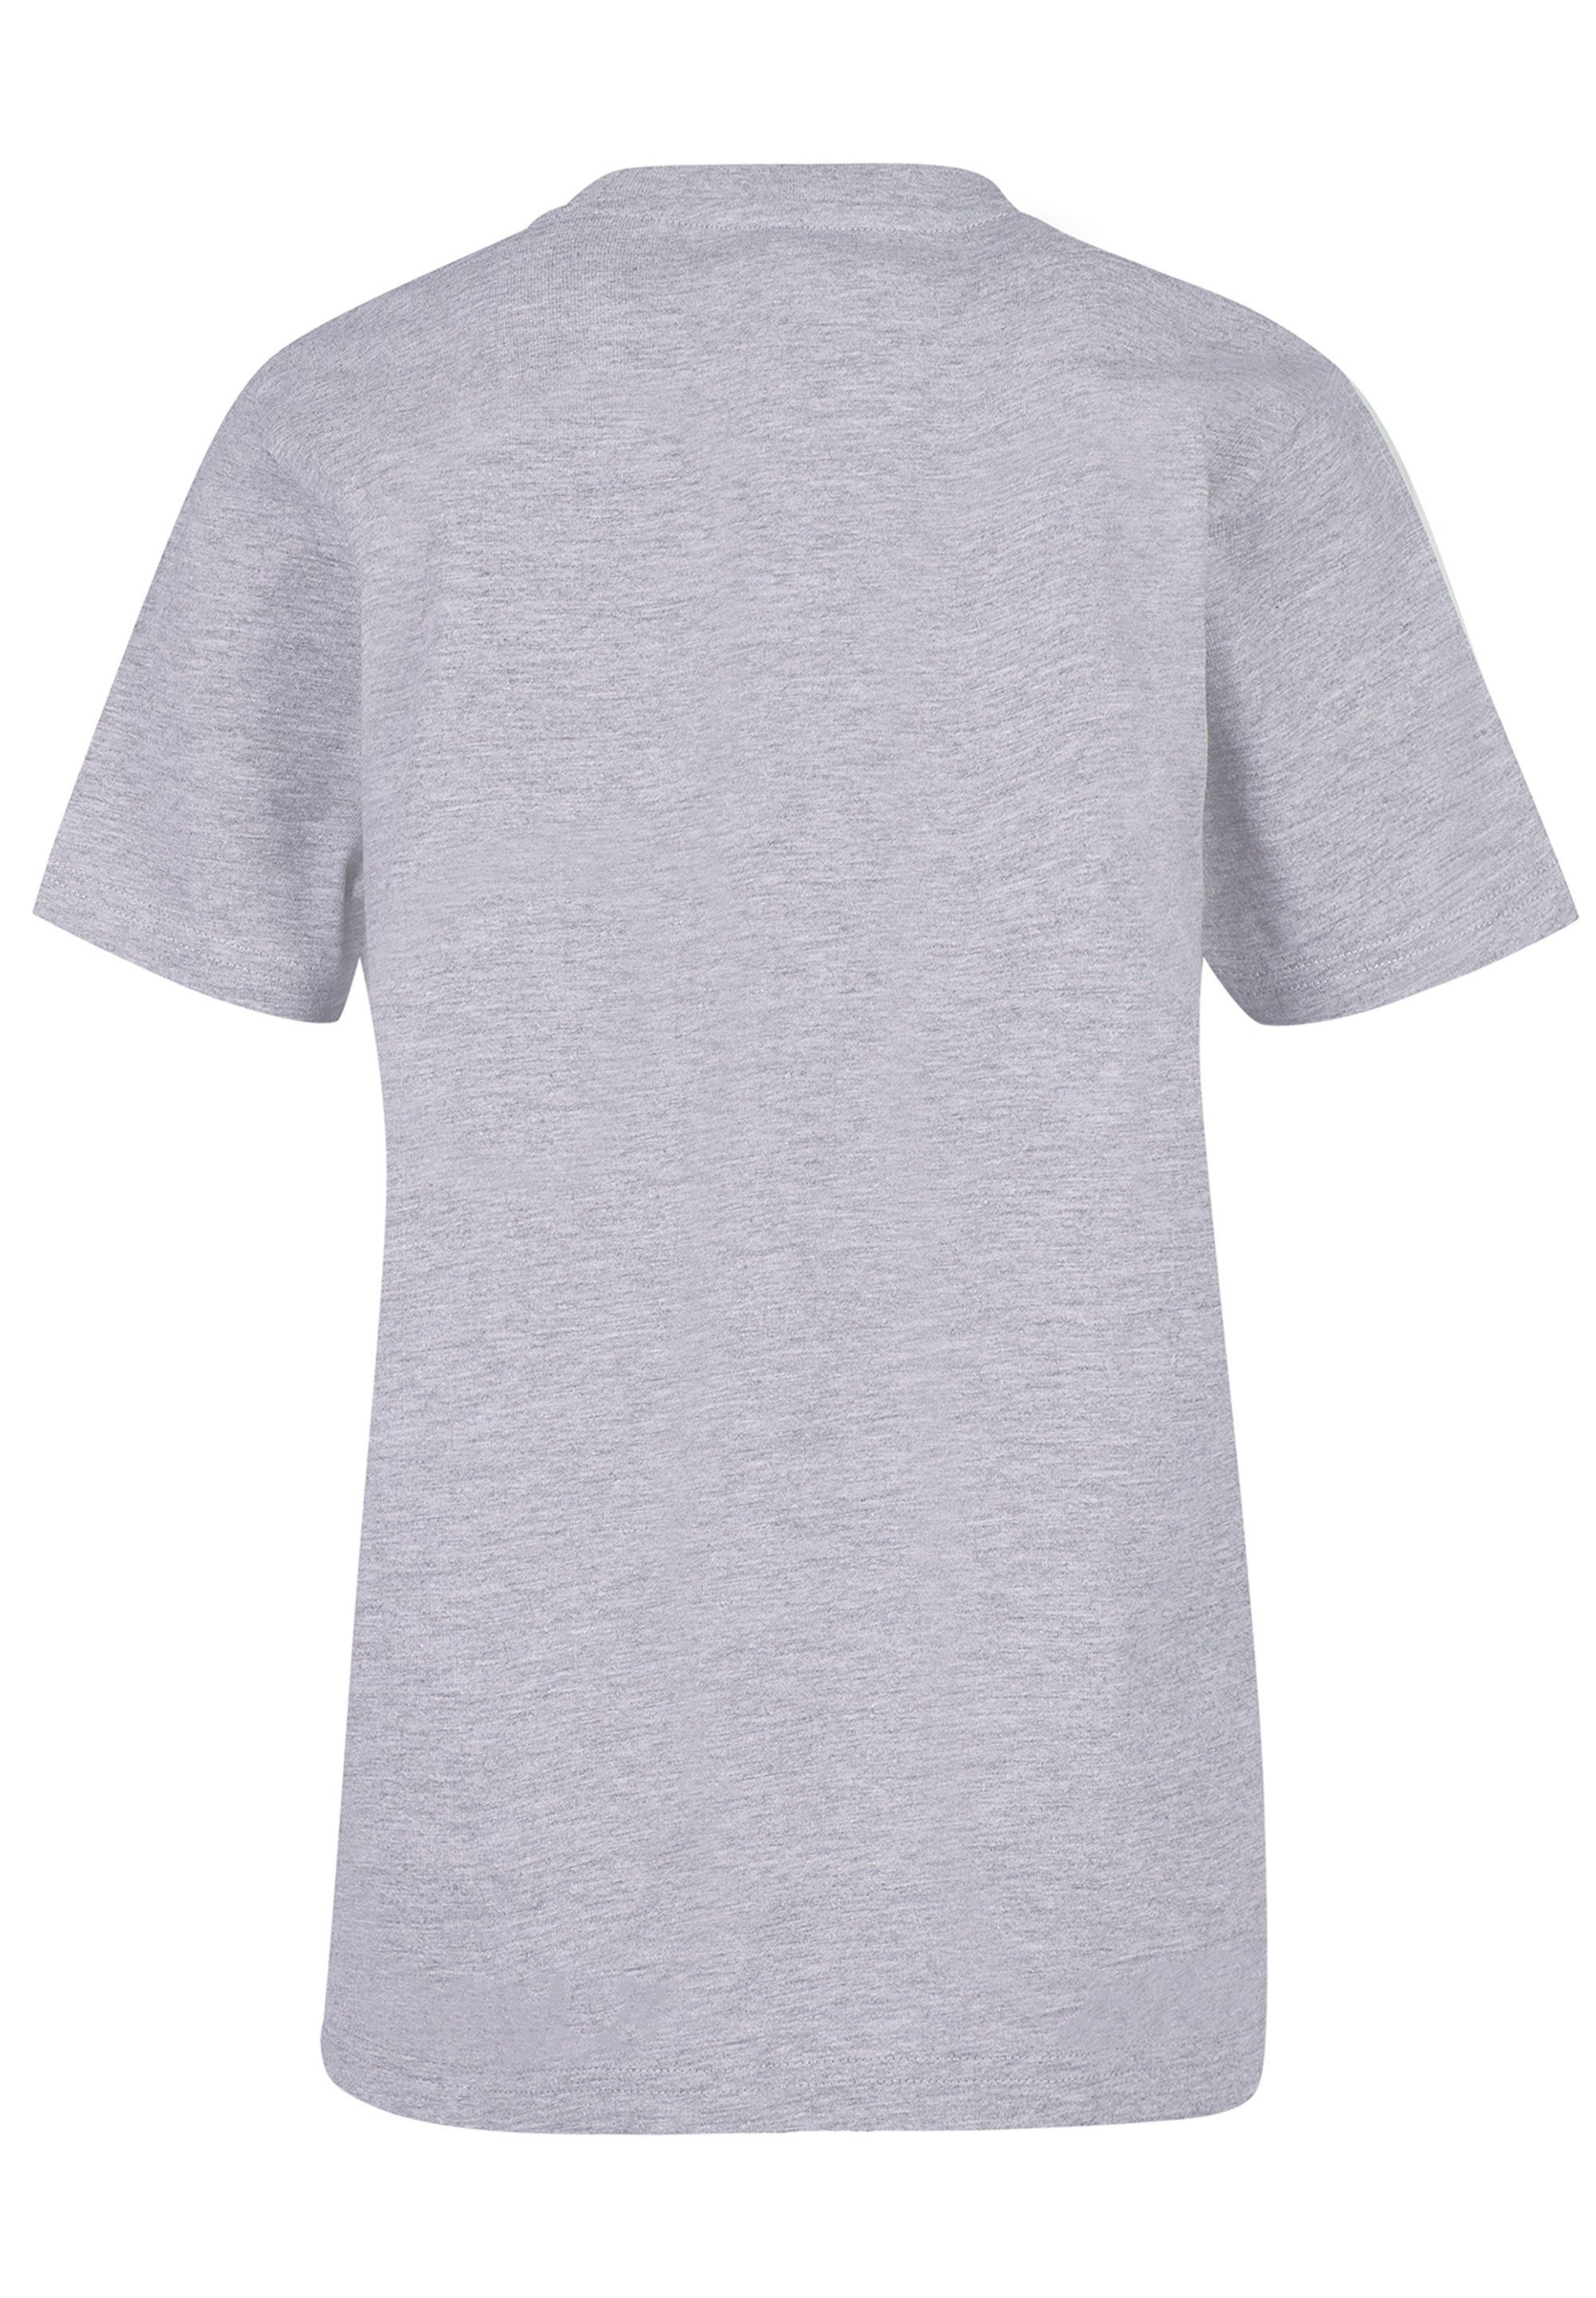 F4NT4STIC T-Shirt Wizard Cat UNISEX heather Print TEE grey